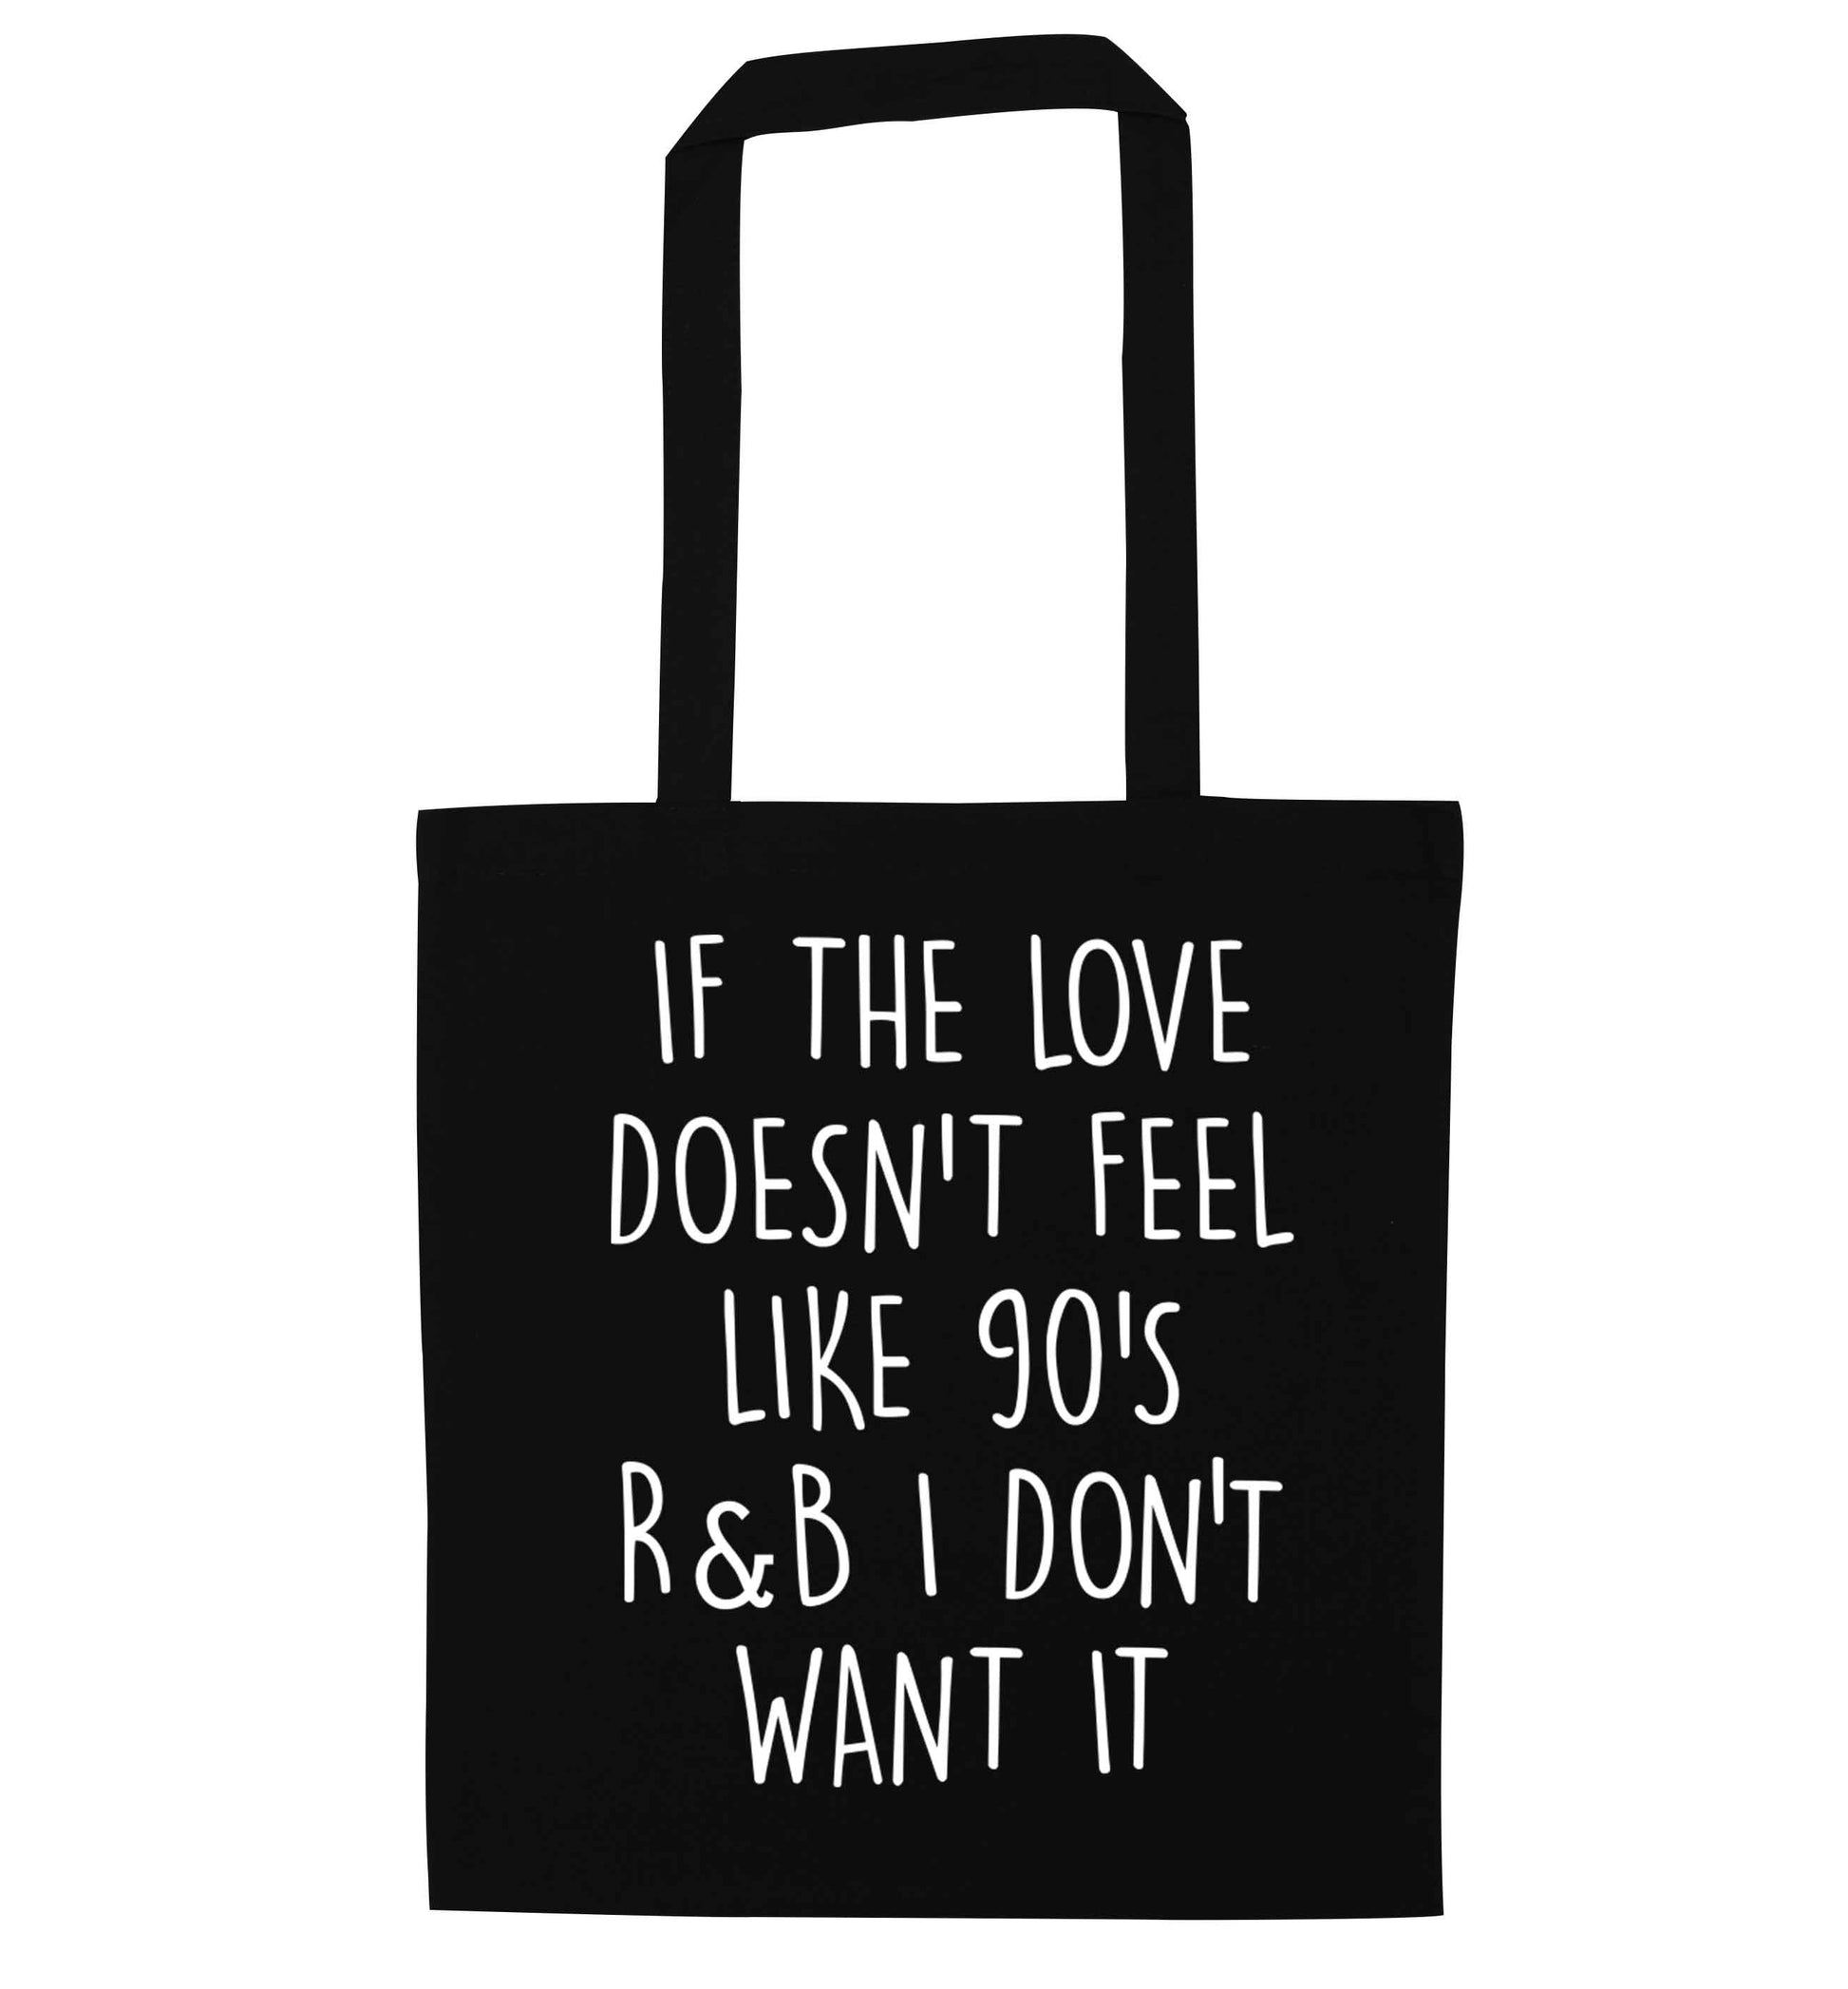 If the love doesn't feel like 90's r&b I don't want it black tote bag